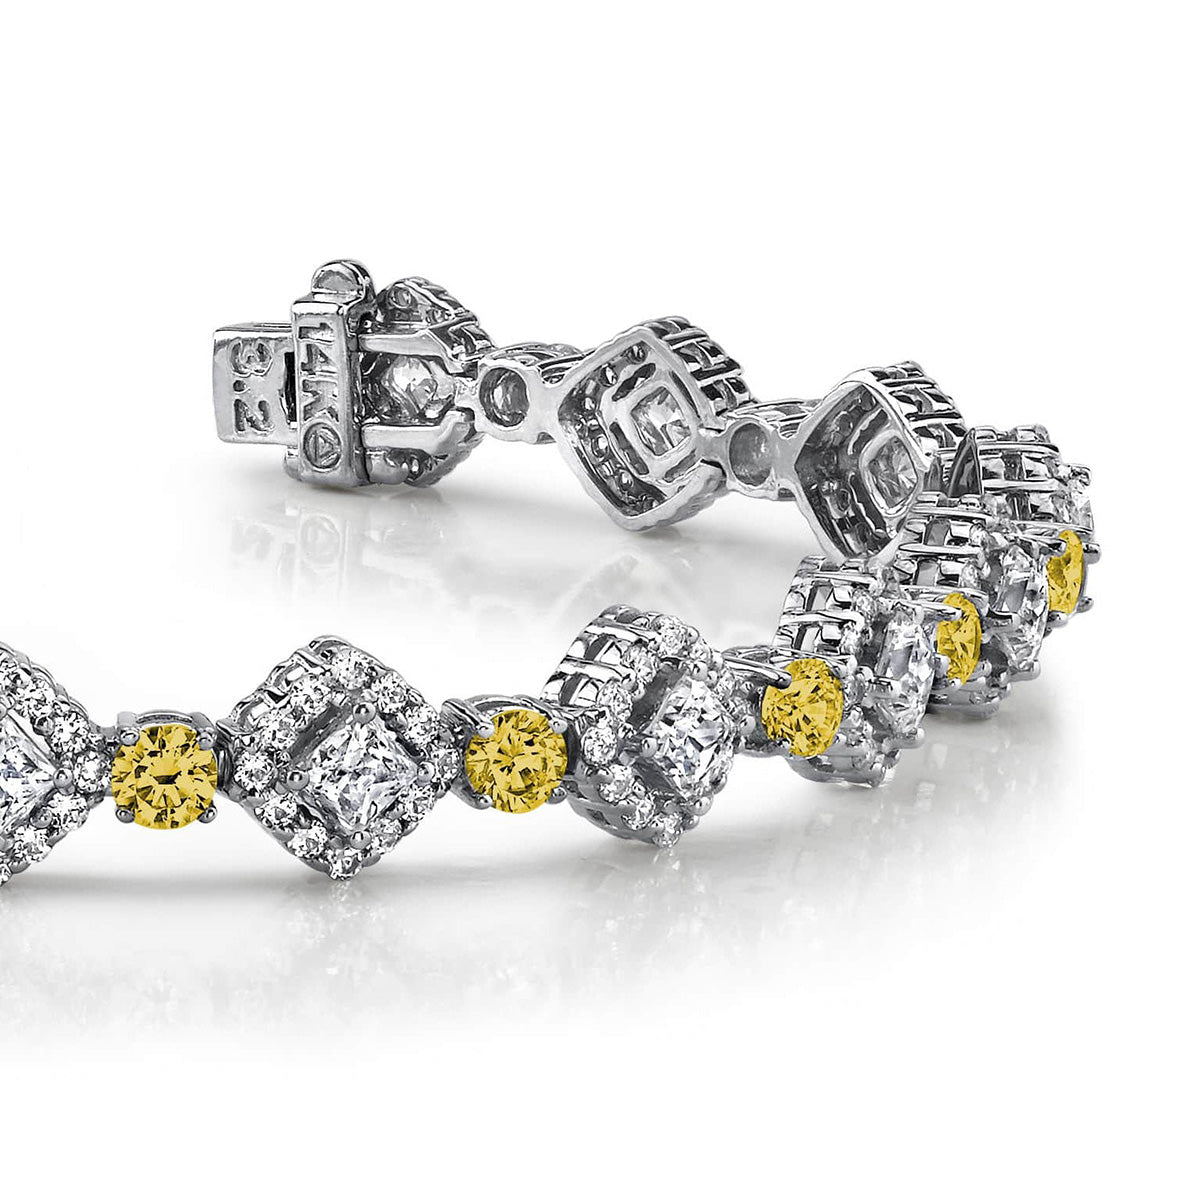 Princess Cut Diamond And Gemstone Bracelet